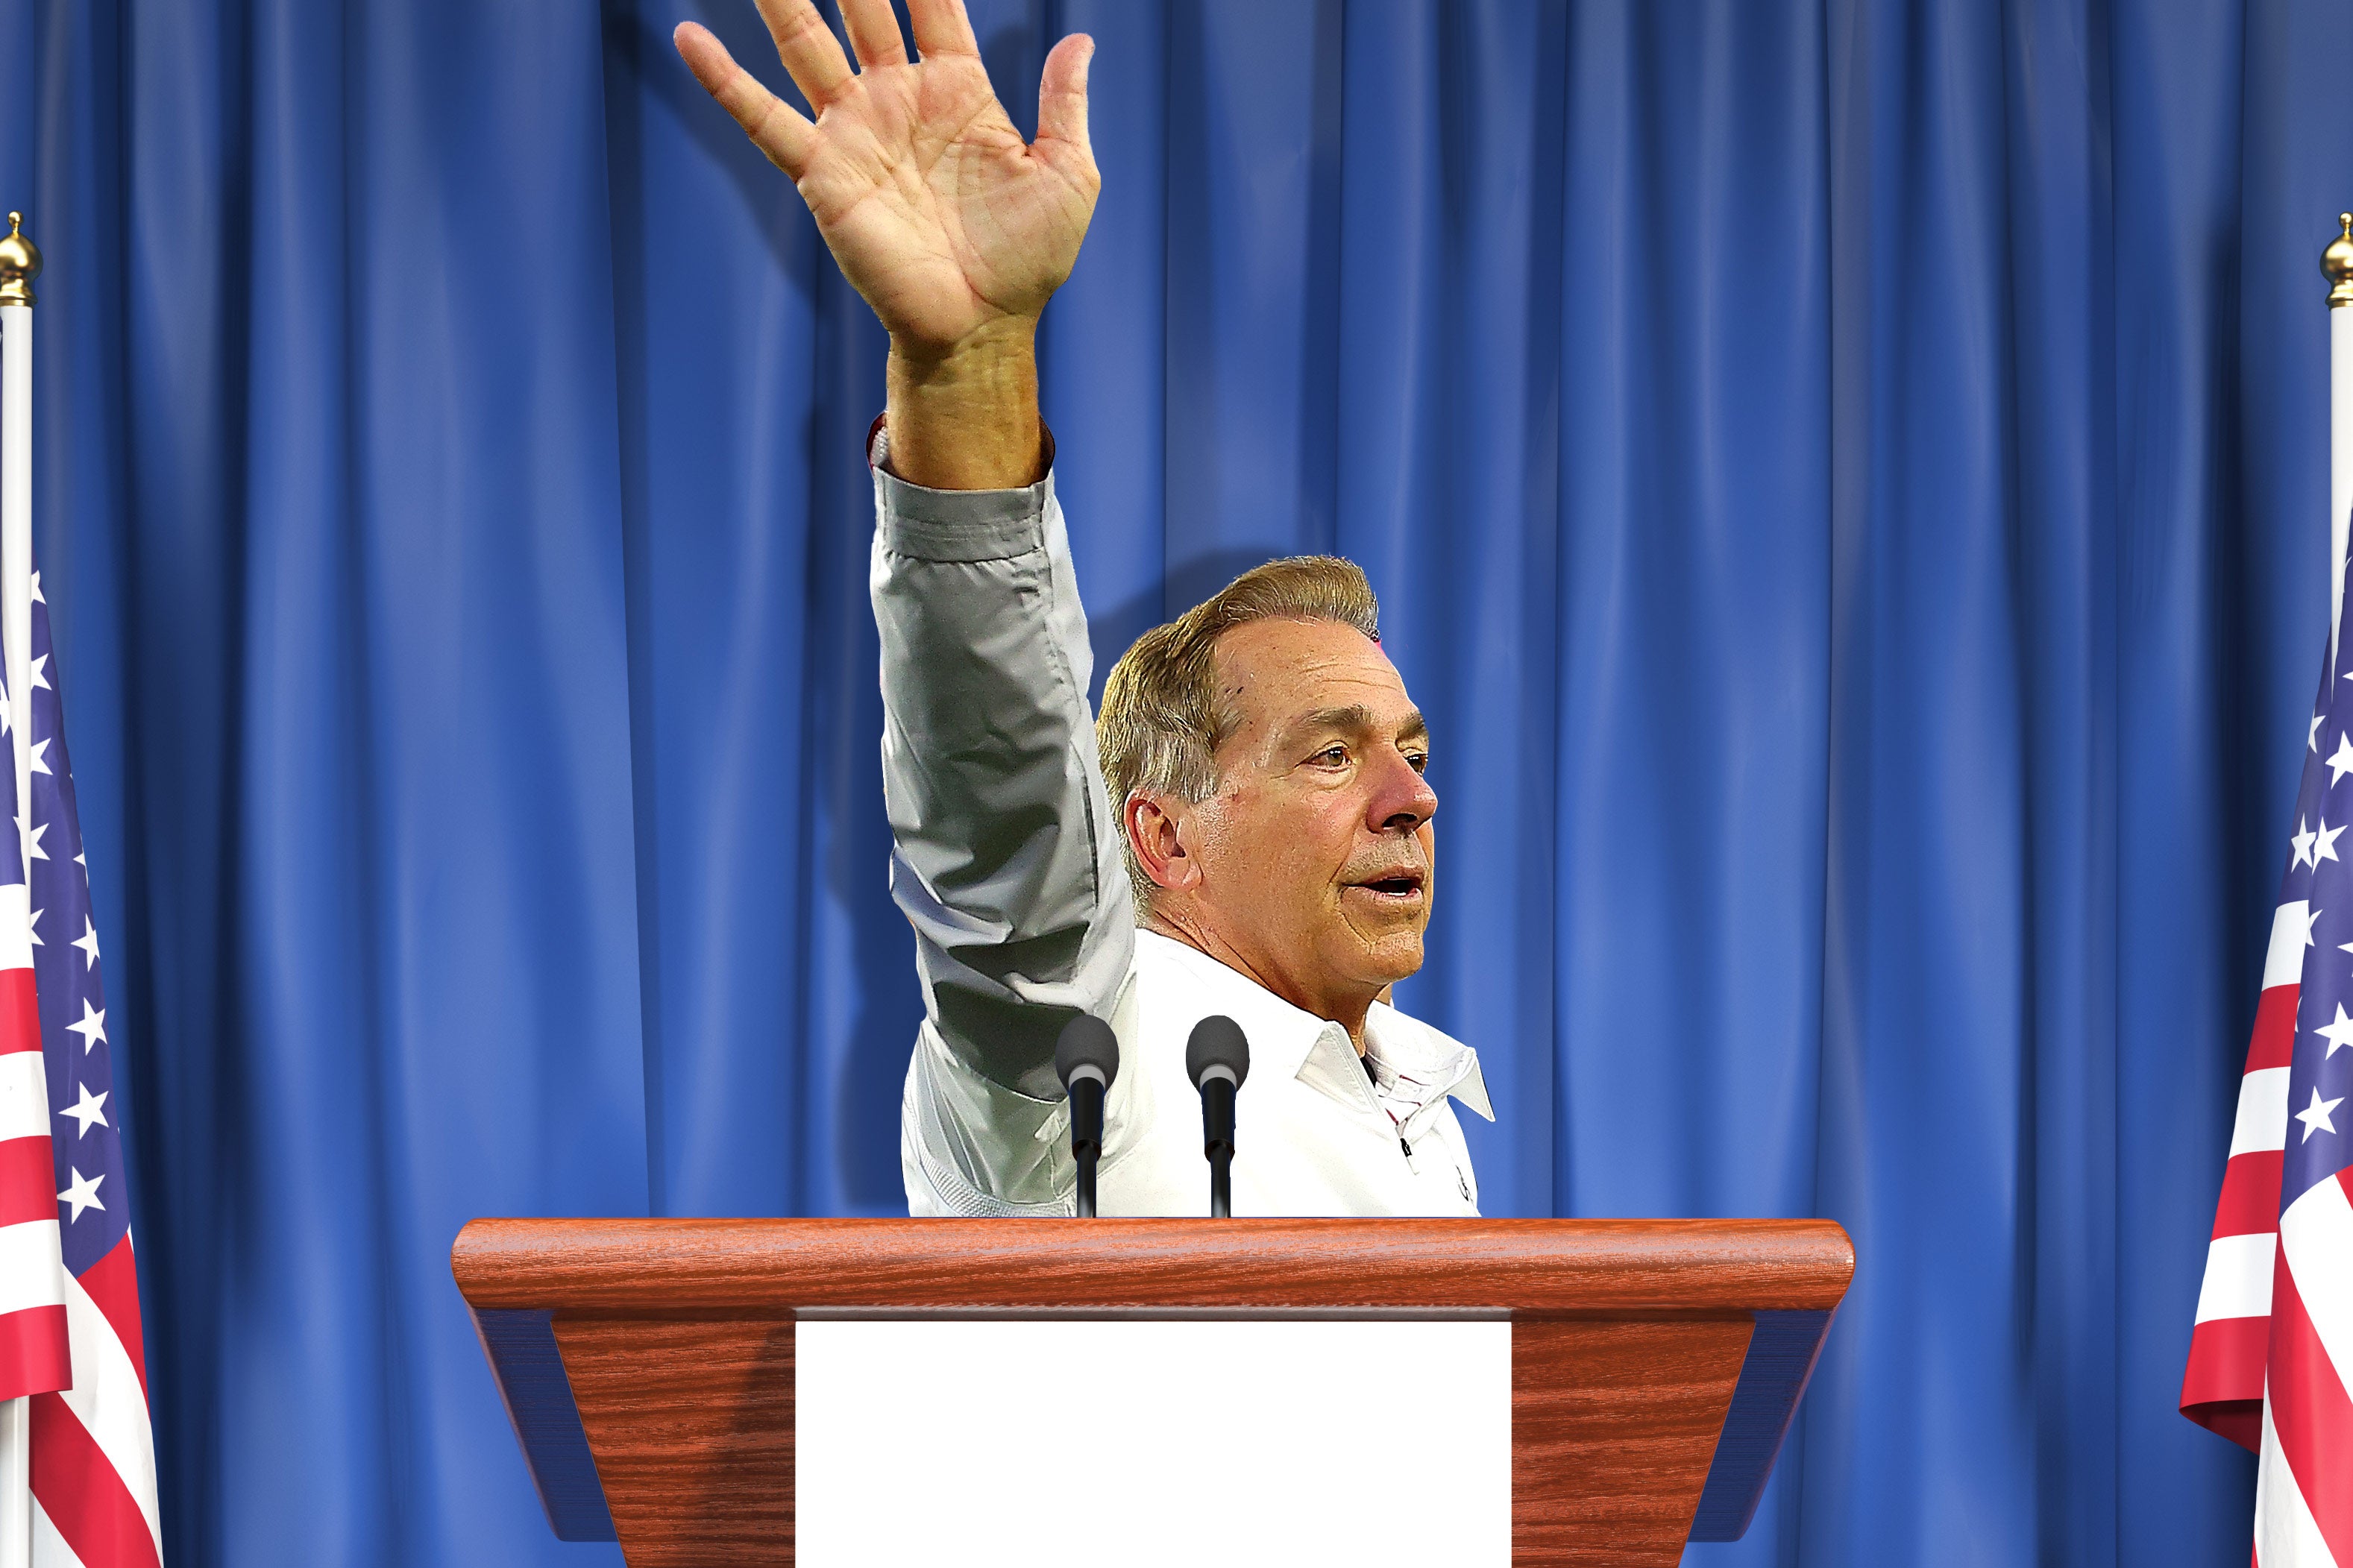 Nick Saban waving from a campaign podium.